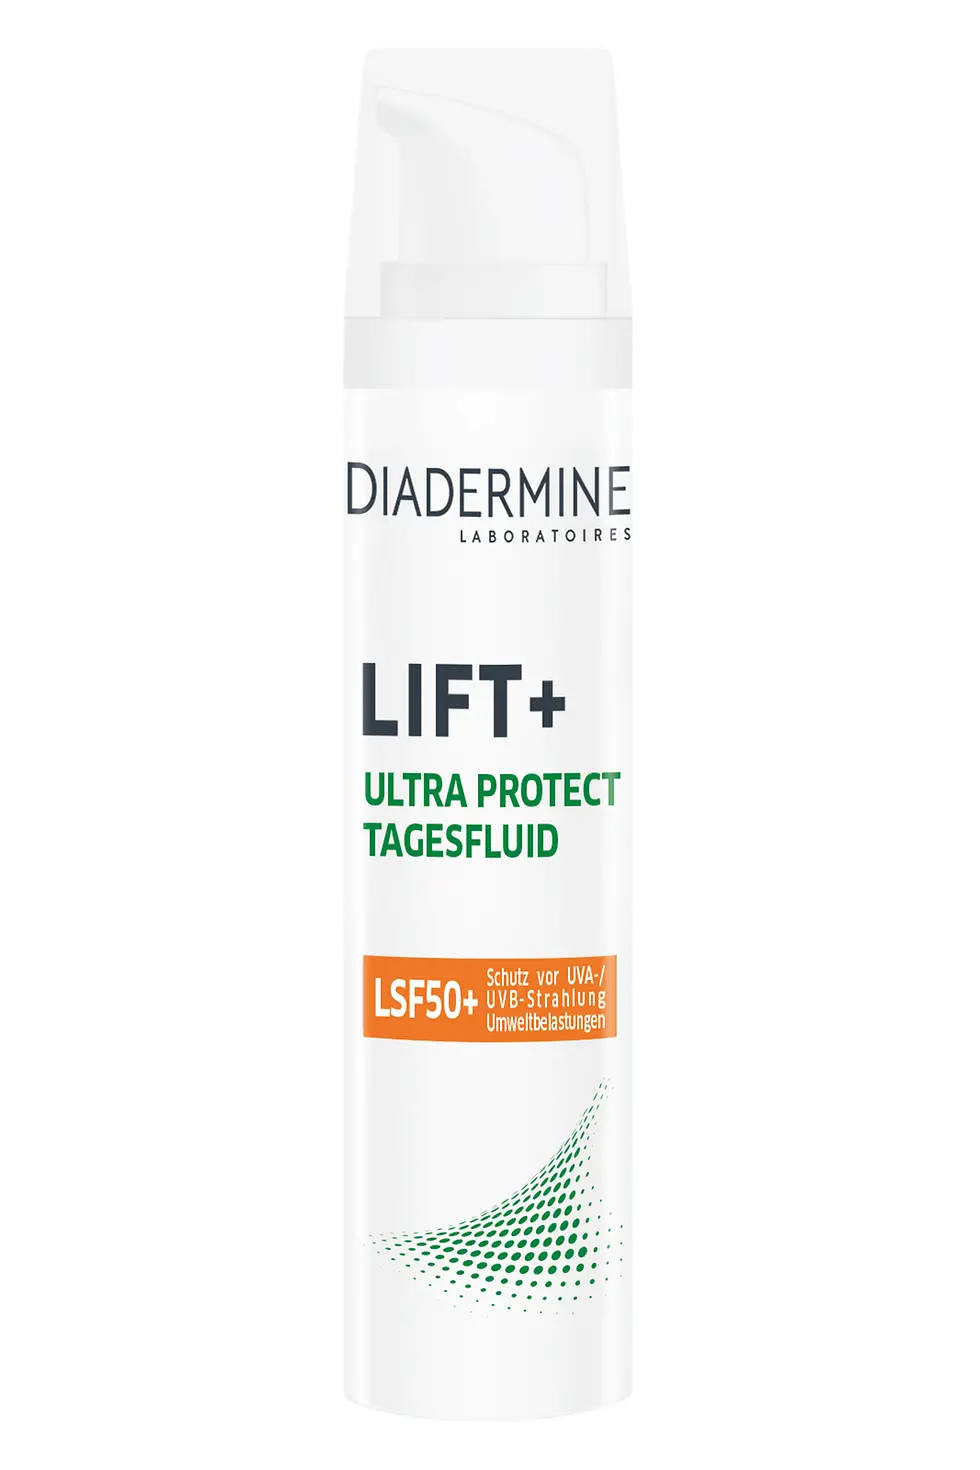 Diadermine Lift+ Ultra Protect Tagesfluid mit LSF50